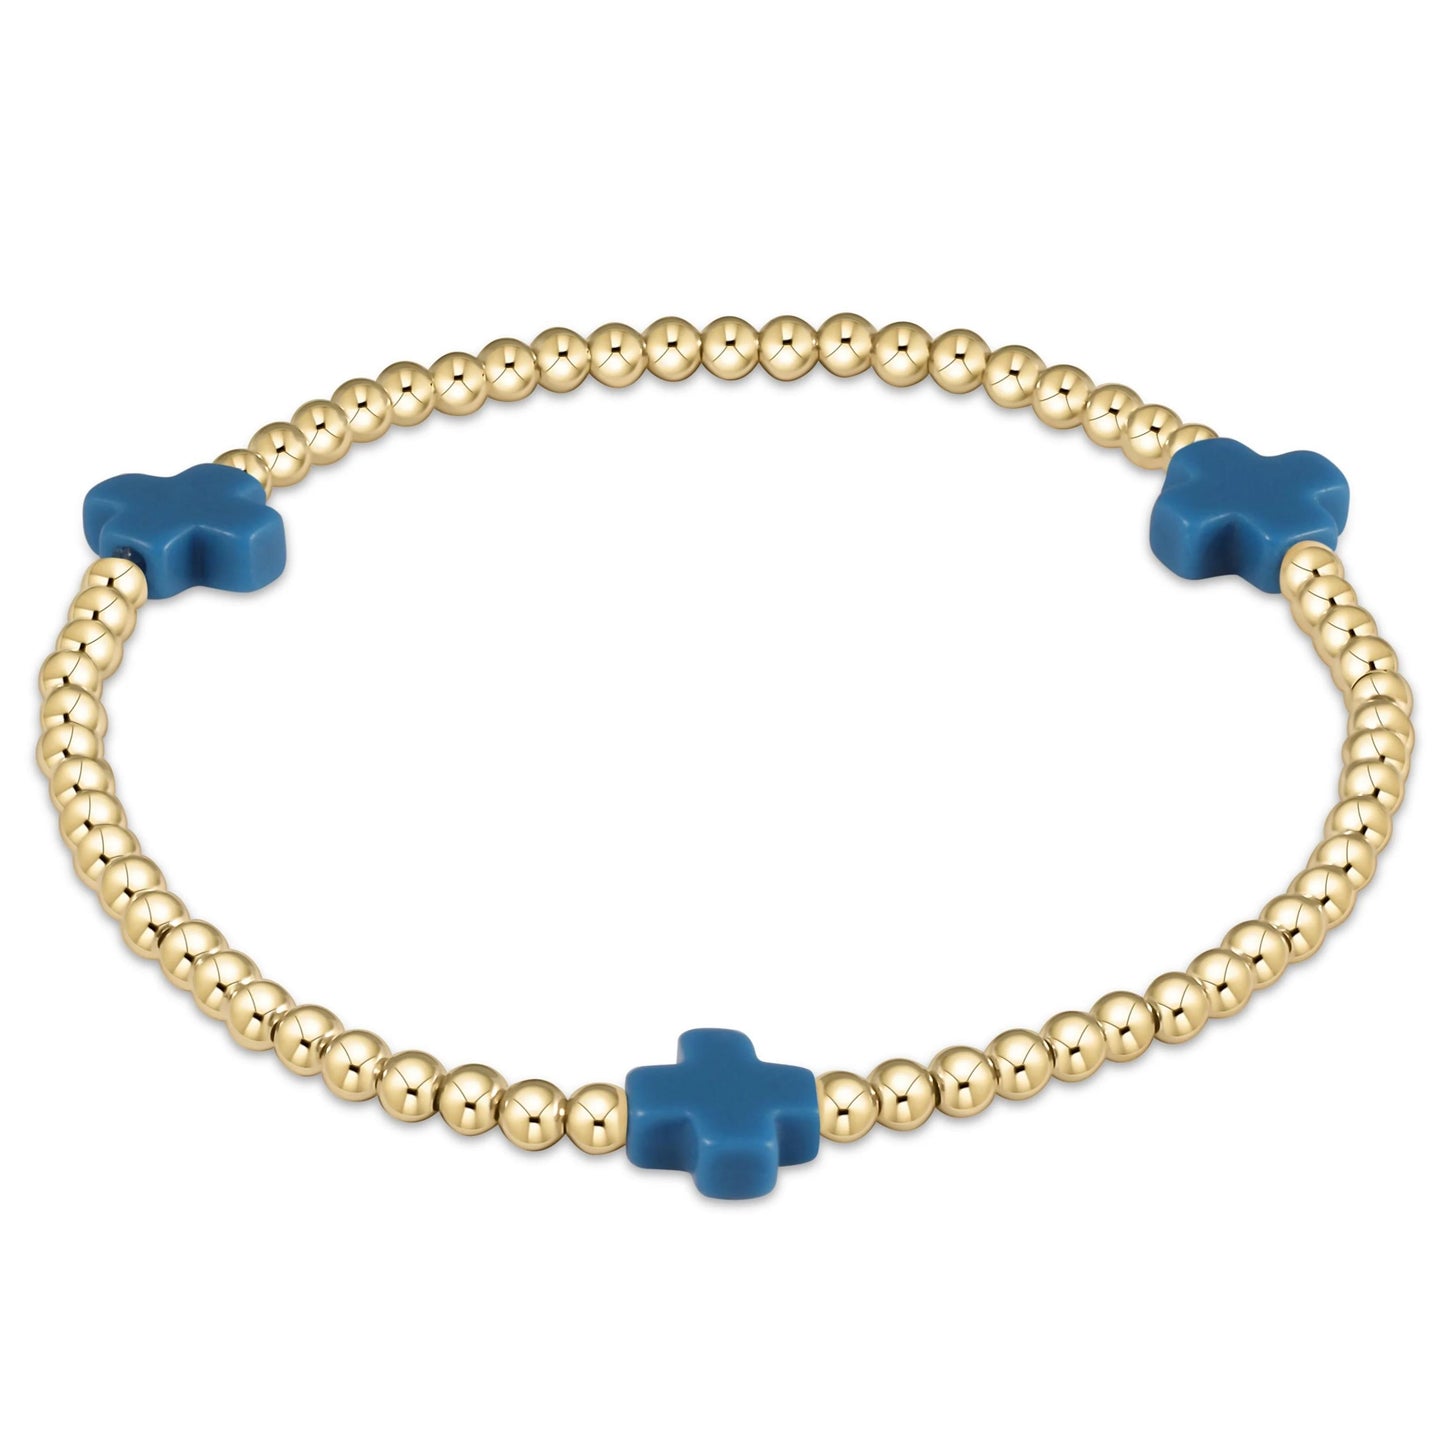 3mm Signature Cross Bracelet in Cobalt - The Village Jeweler